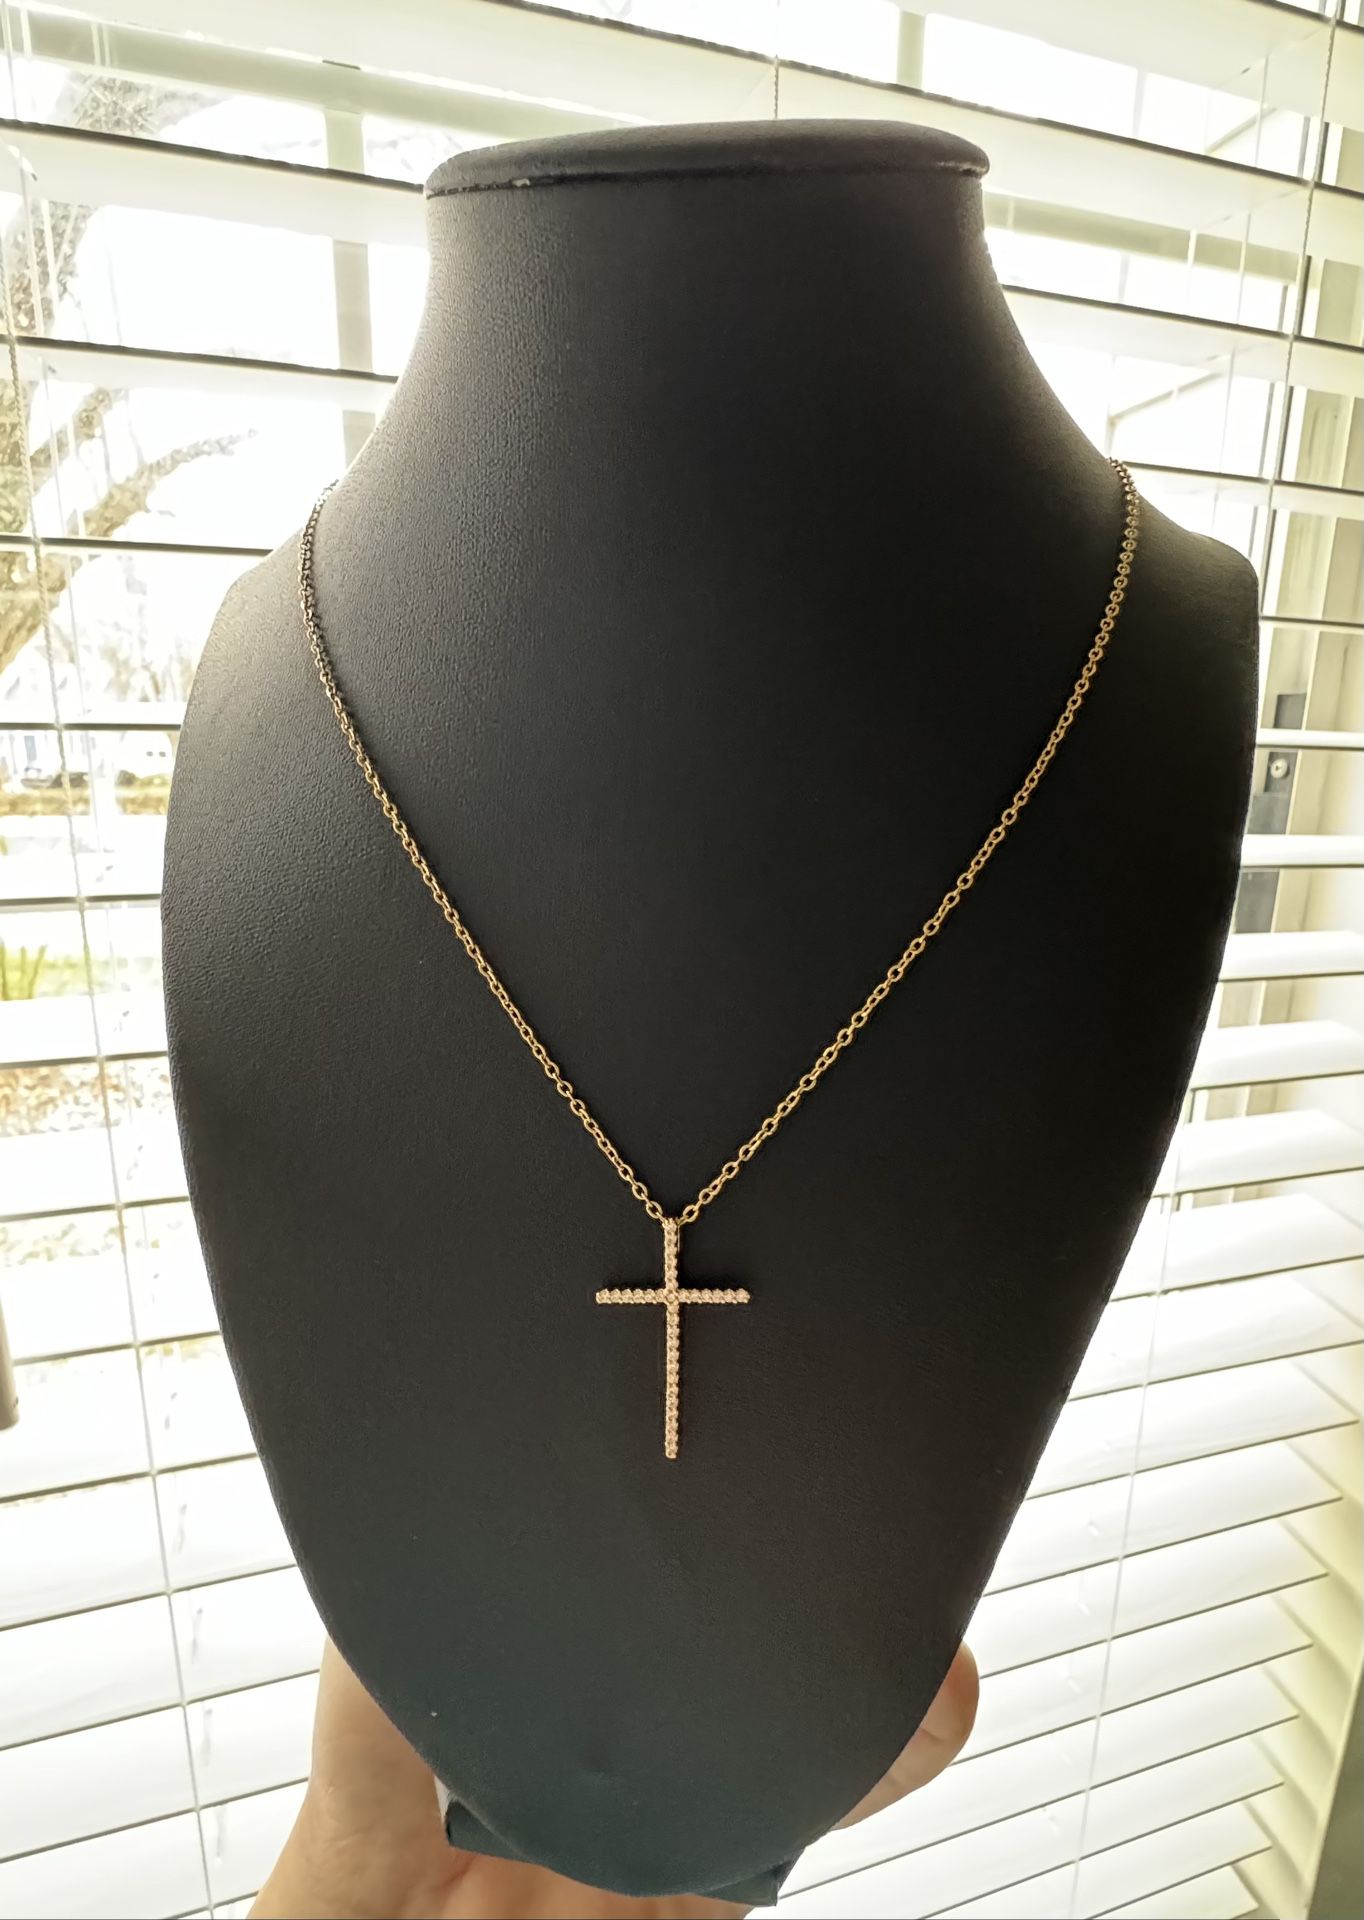 Cross Pendant Necklace 